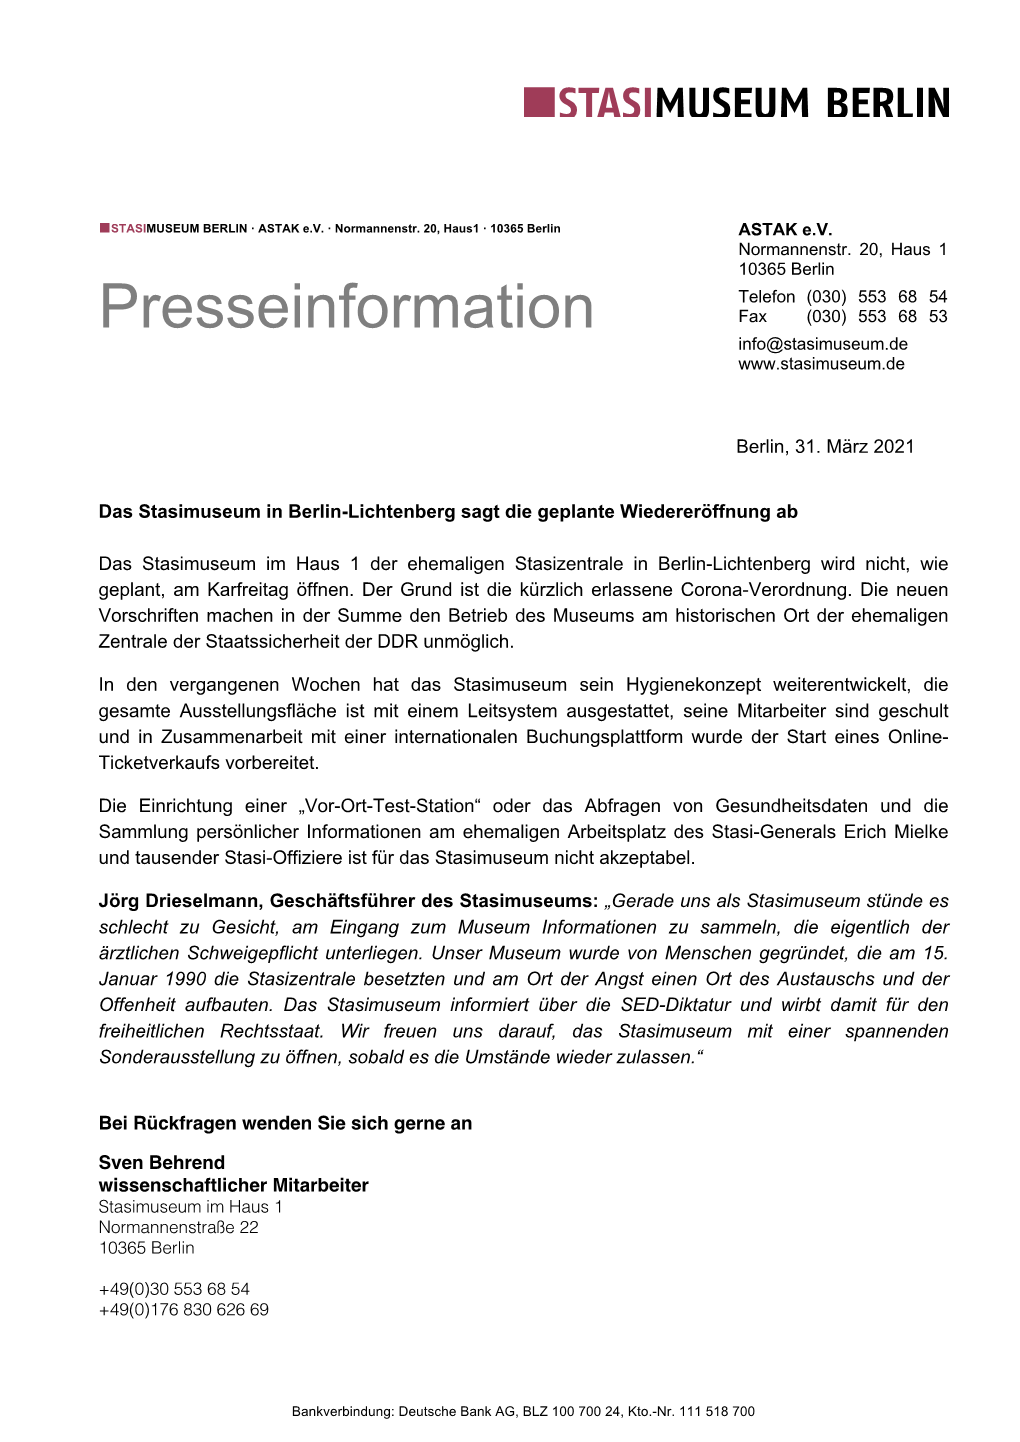 Presseinformation Info@Stasimuseum.De